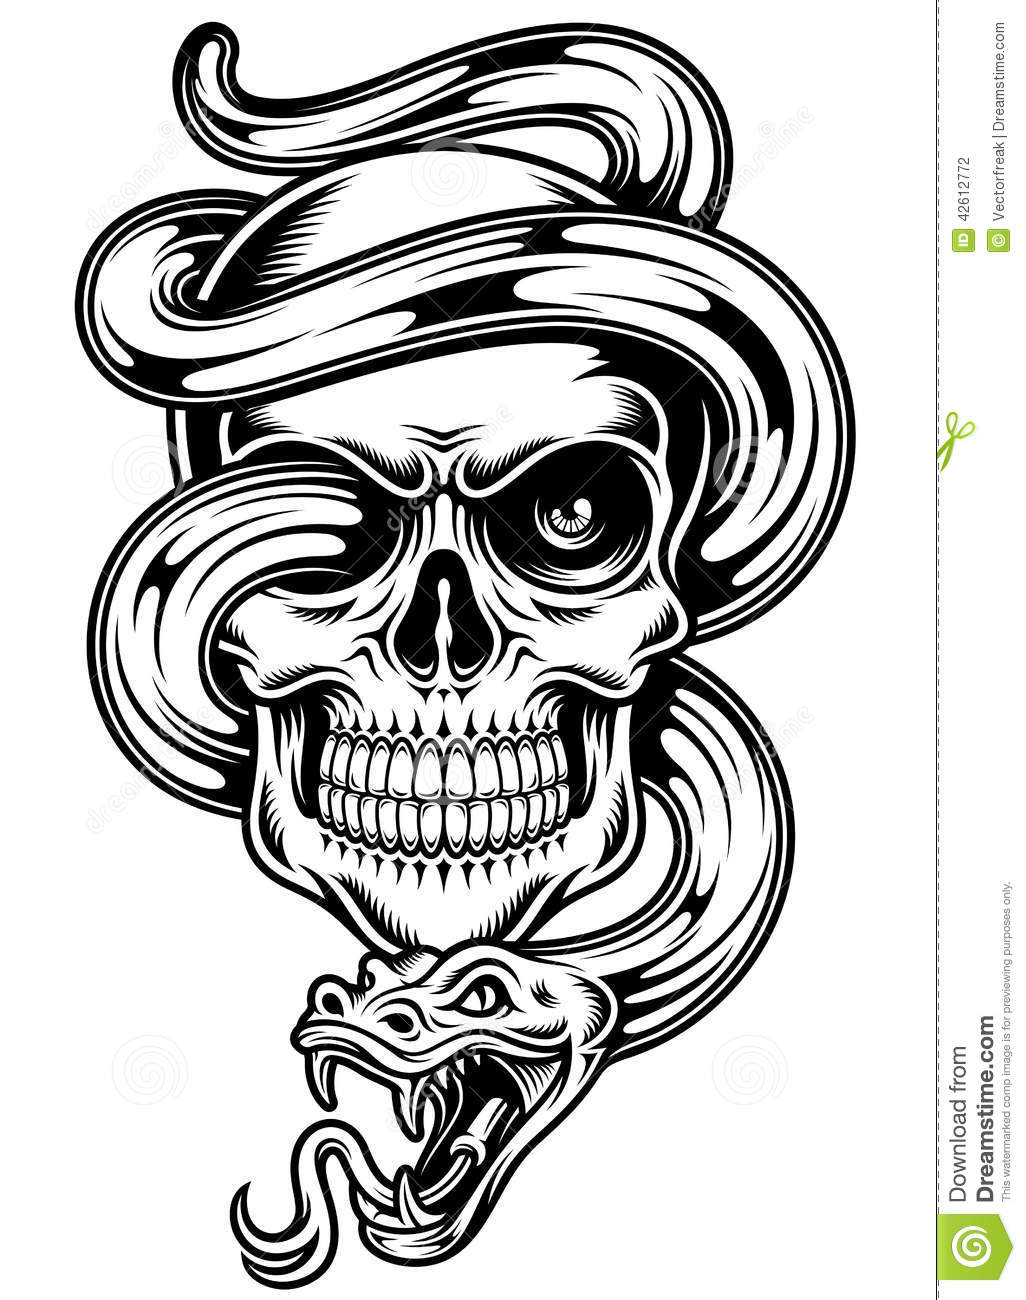 Snake and Skull Tattoo Designs